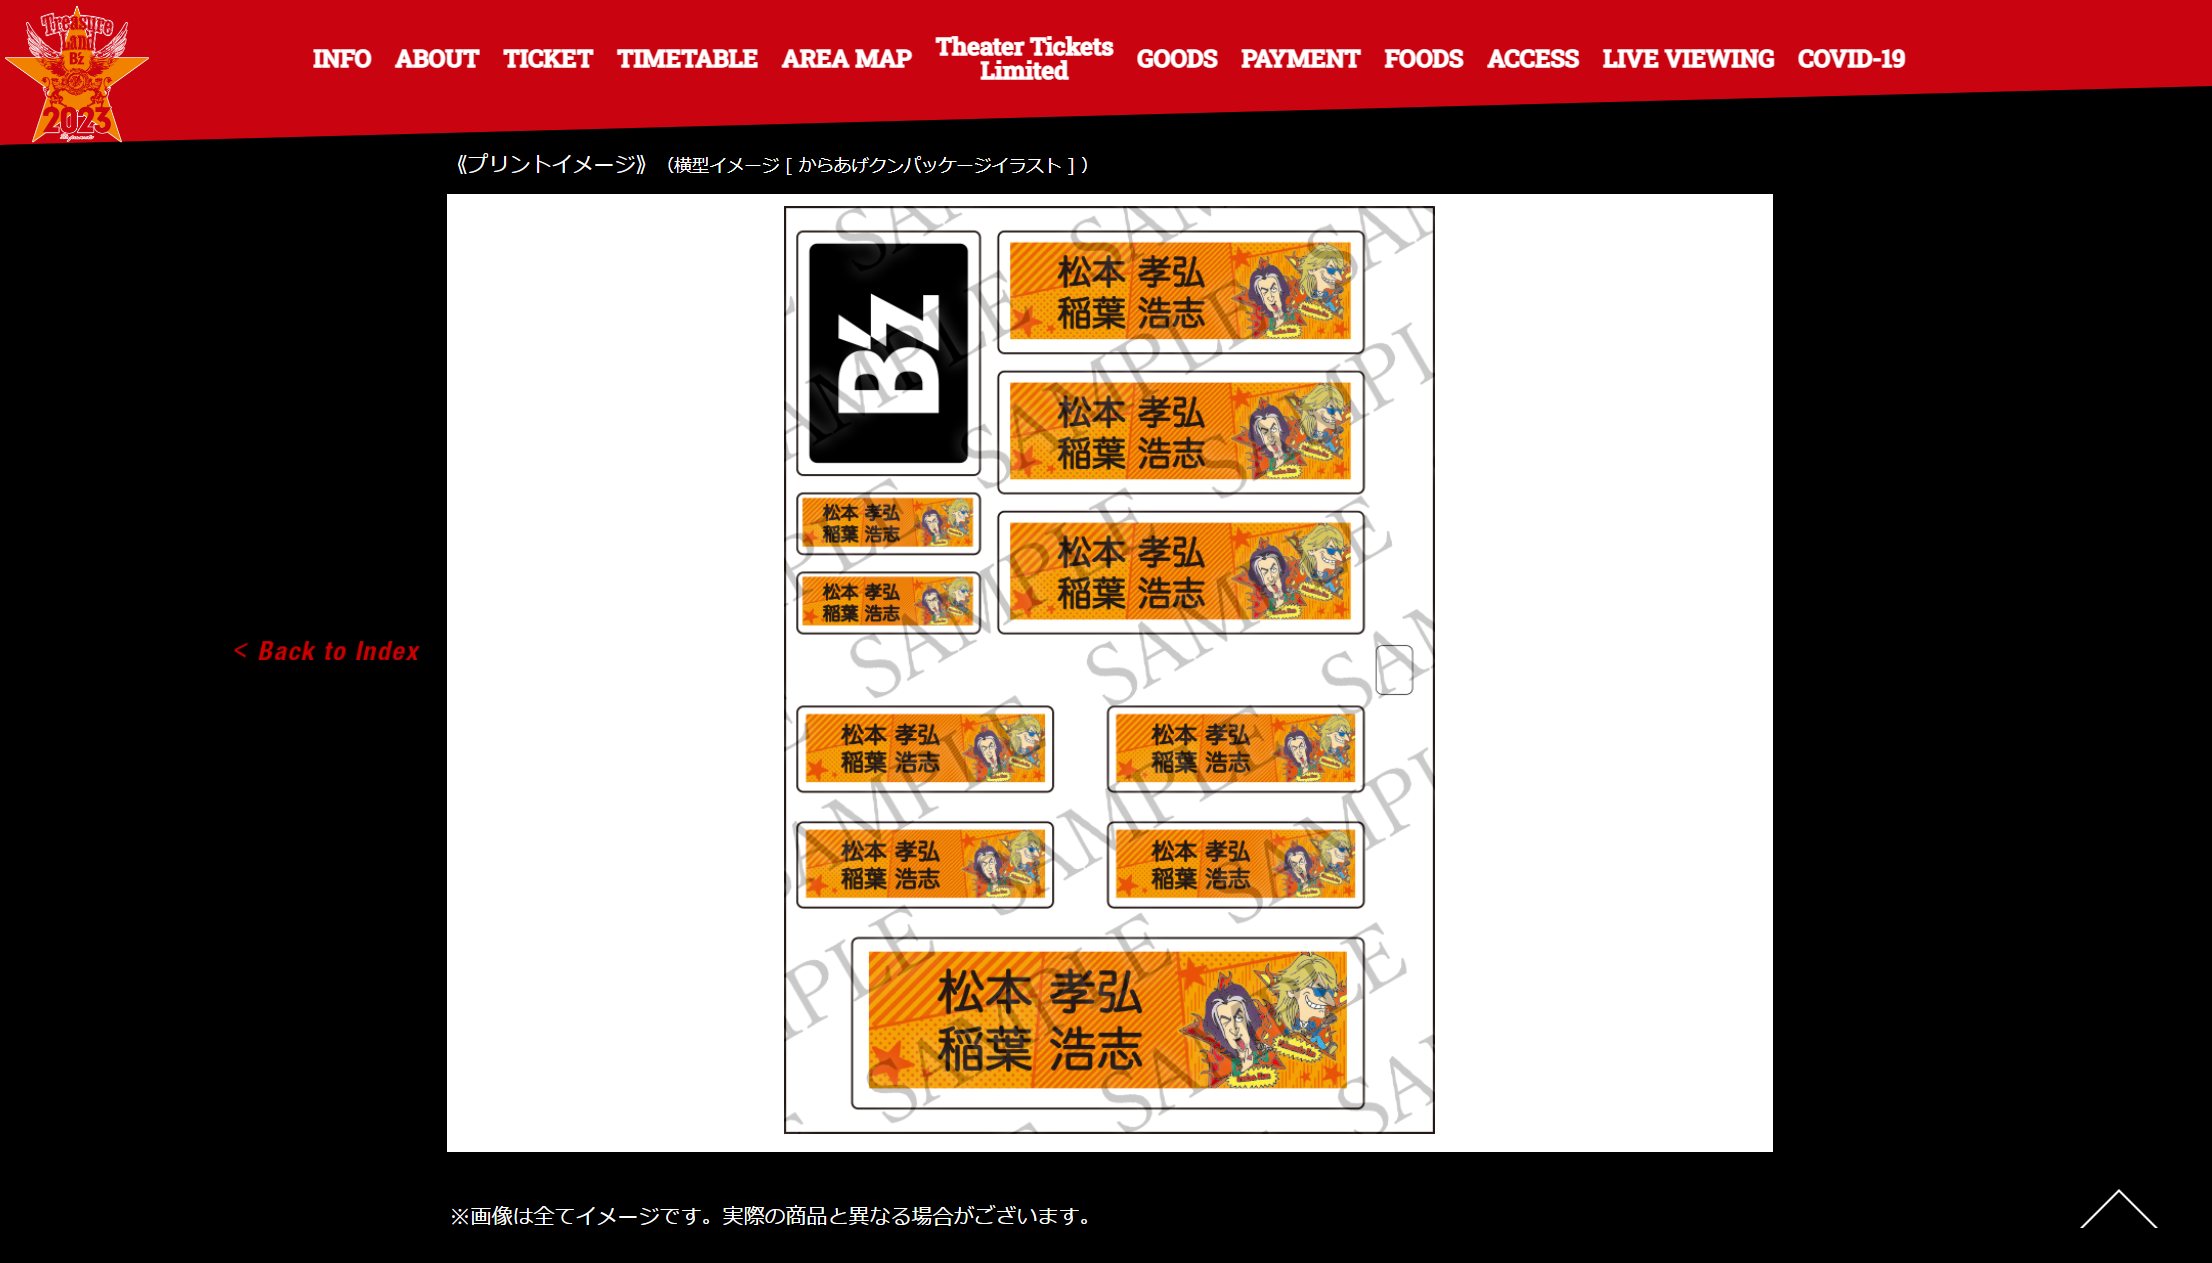 B'z公式サイトで公開されたオリジナルネームステッカーのイメージ